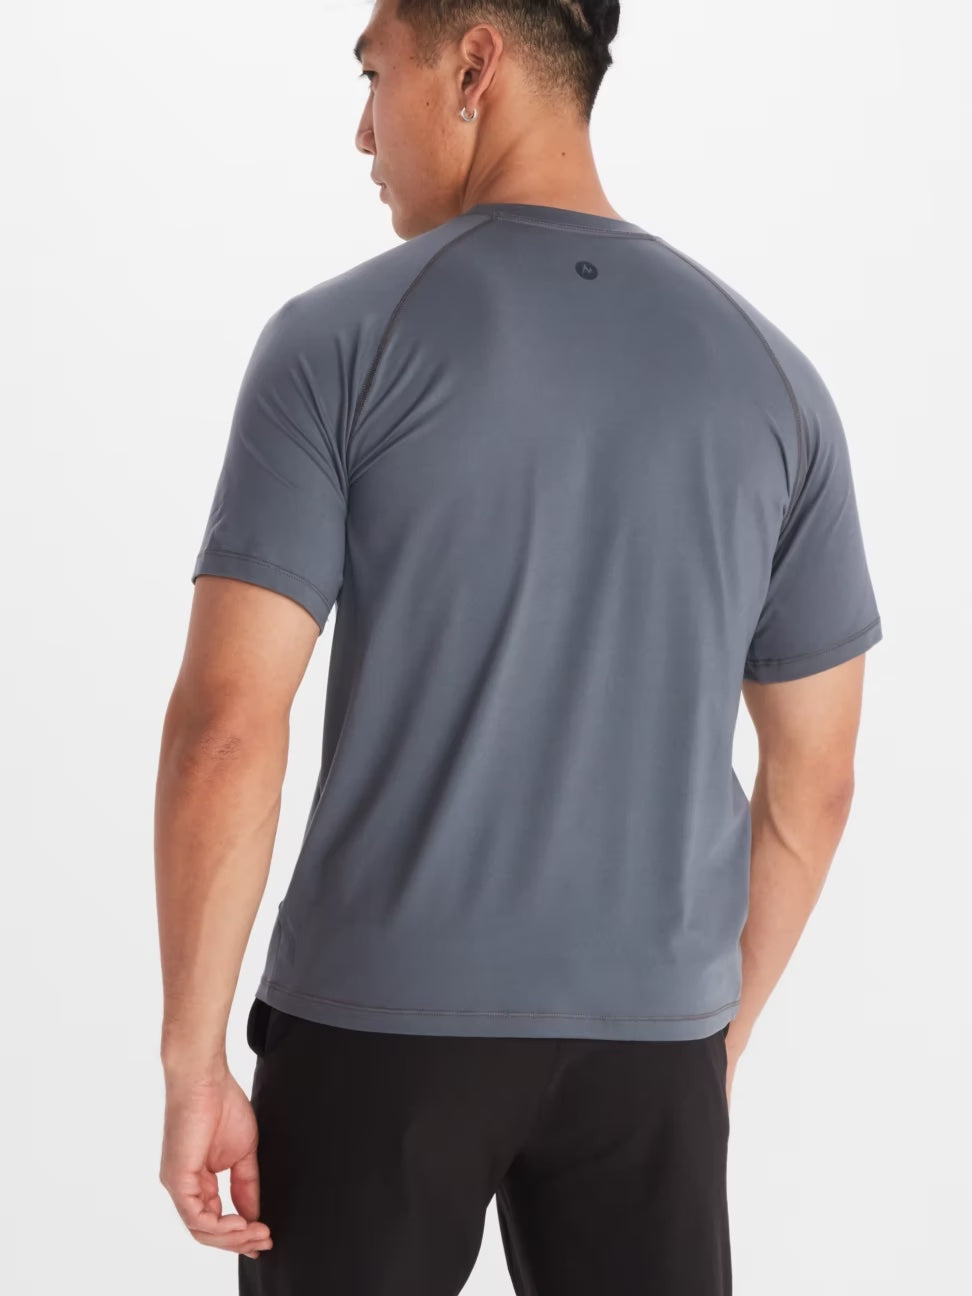 Marmot Men's Windridge Short-Sleeve T-Shirt